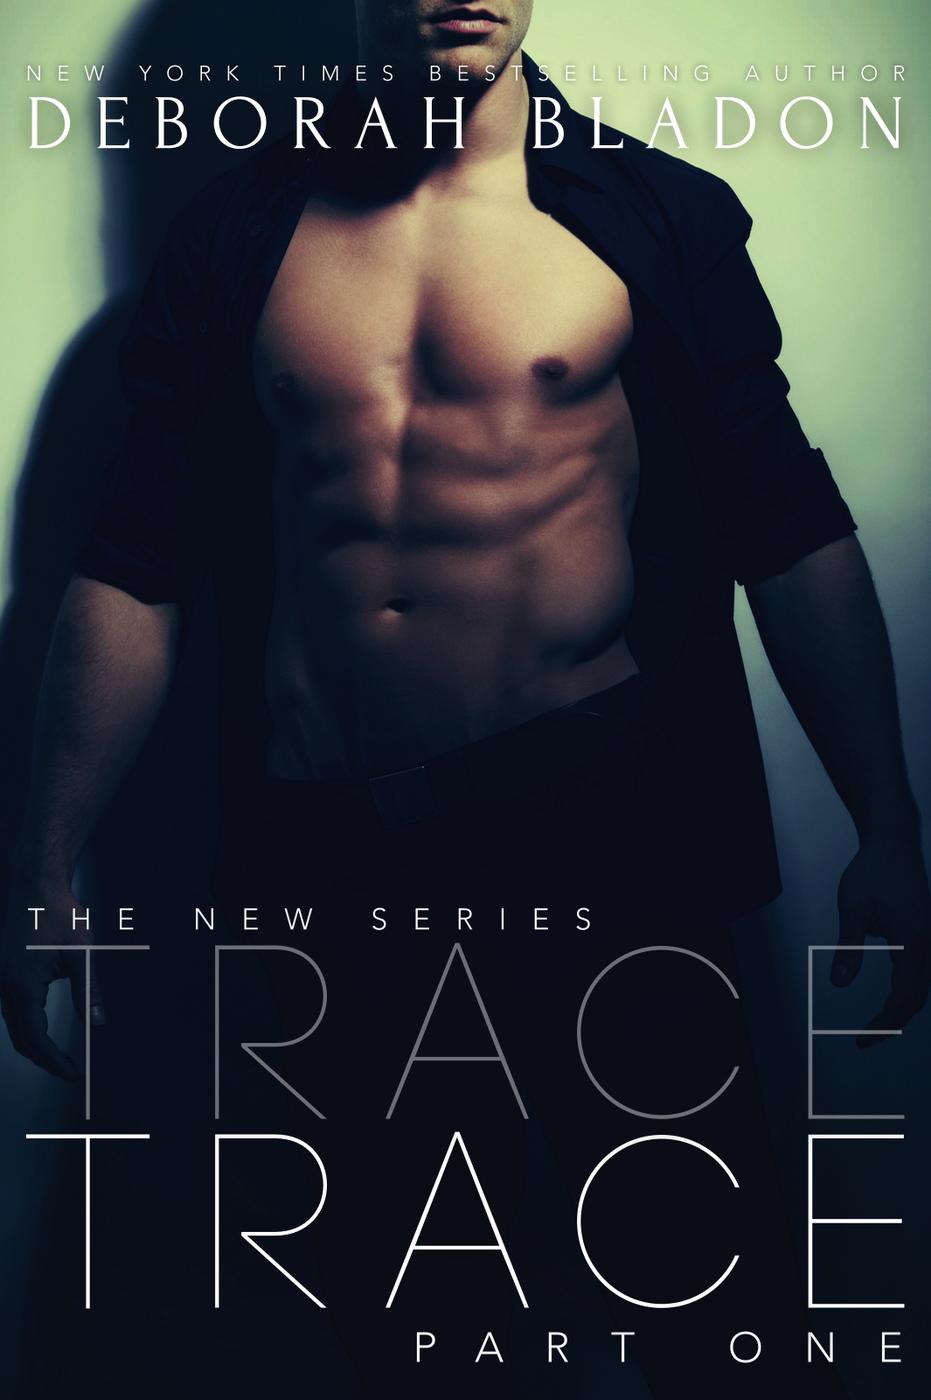 TRACE (The TRACE Series, #1) (2015) by Deborah Bladon